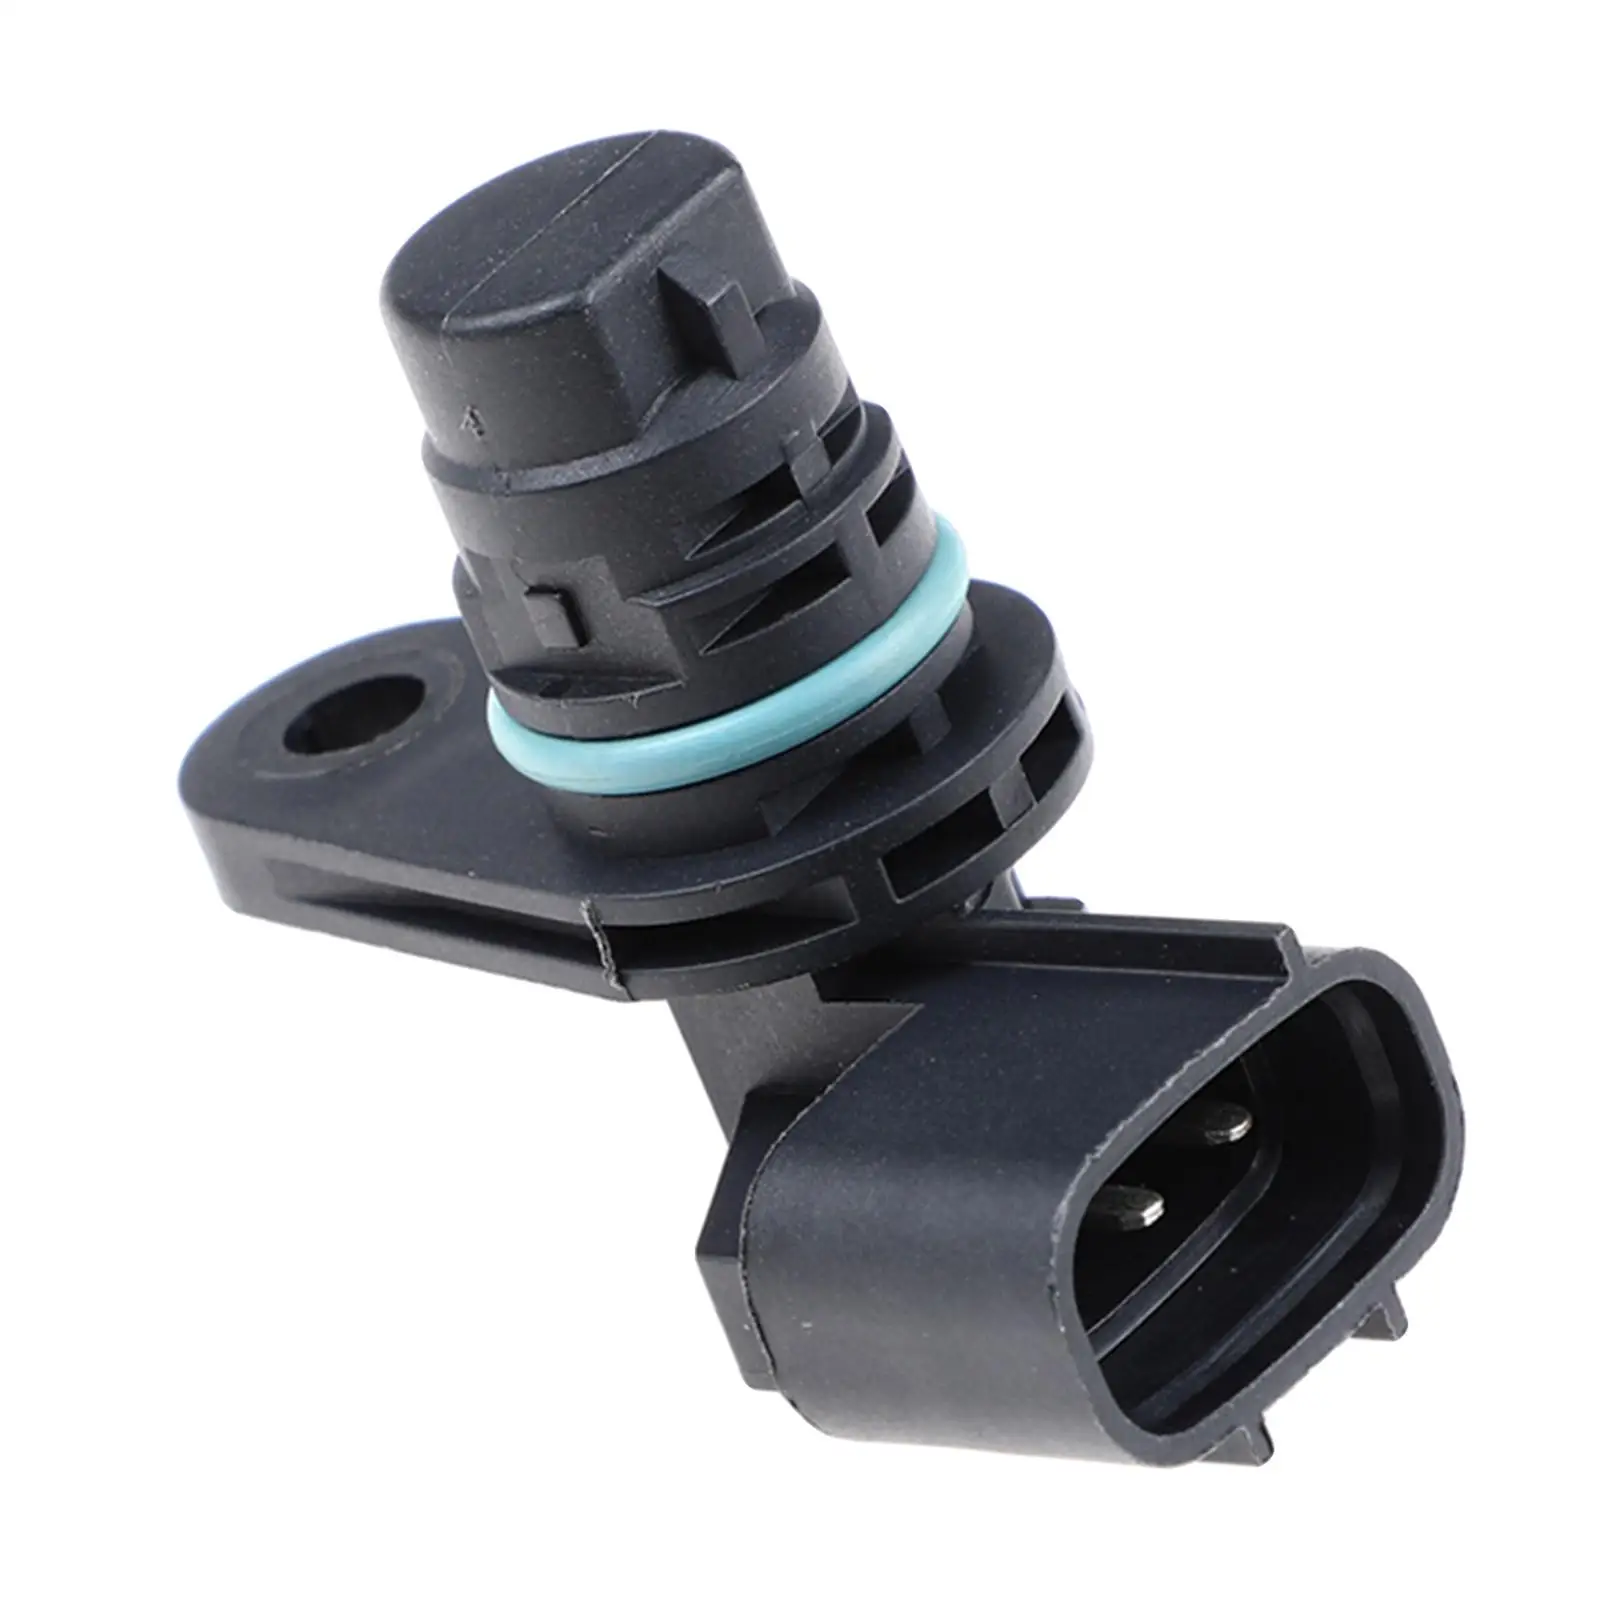 Car Camshaft Position Sensor Replacement Accessory Fits for  Sonata 2006-2014 39350-250.0L 2.4L